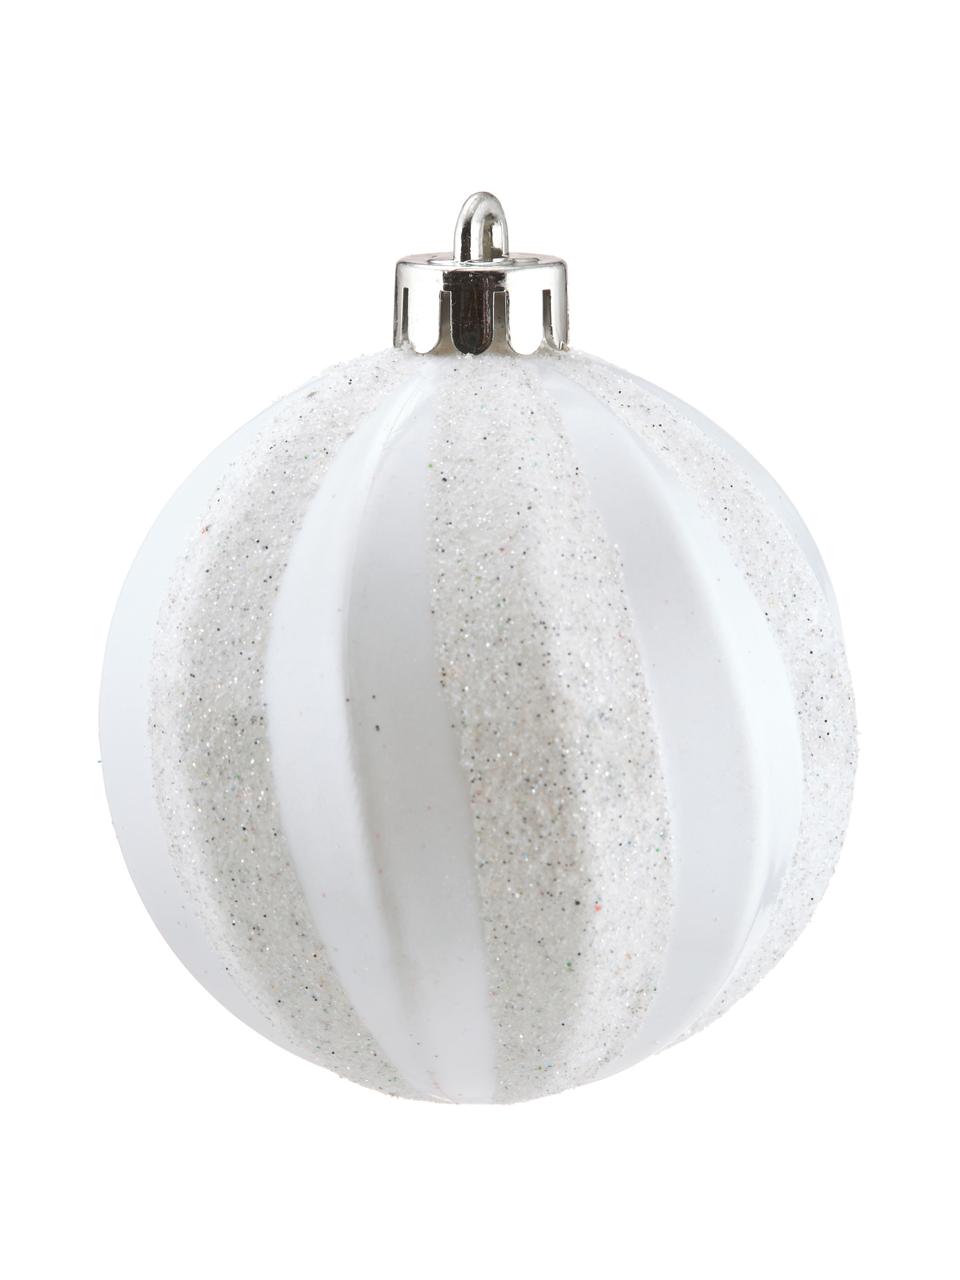 Set de bolas de Navidad Turnip, Ø 7 cm, 60 uds., Blanco, plata, turquesa, Ø 7 cm